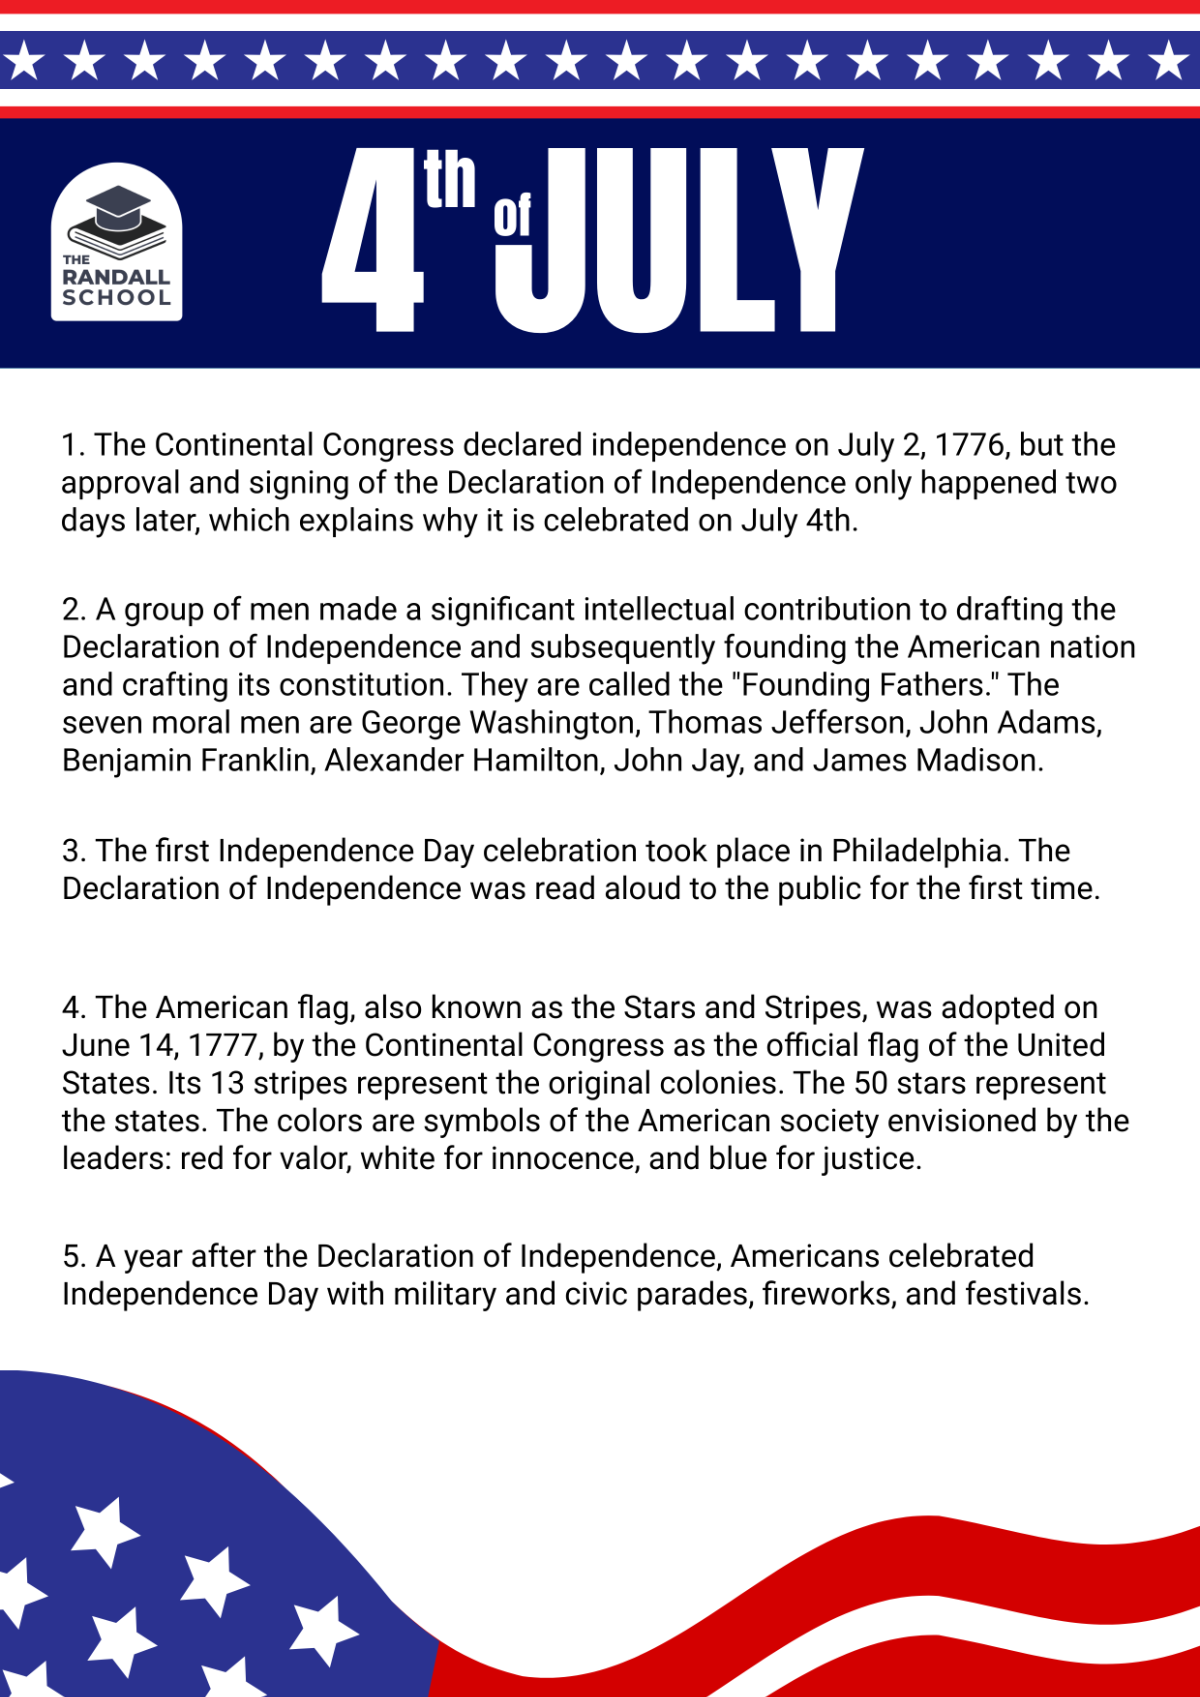 July 4th Fact Sheet